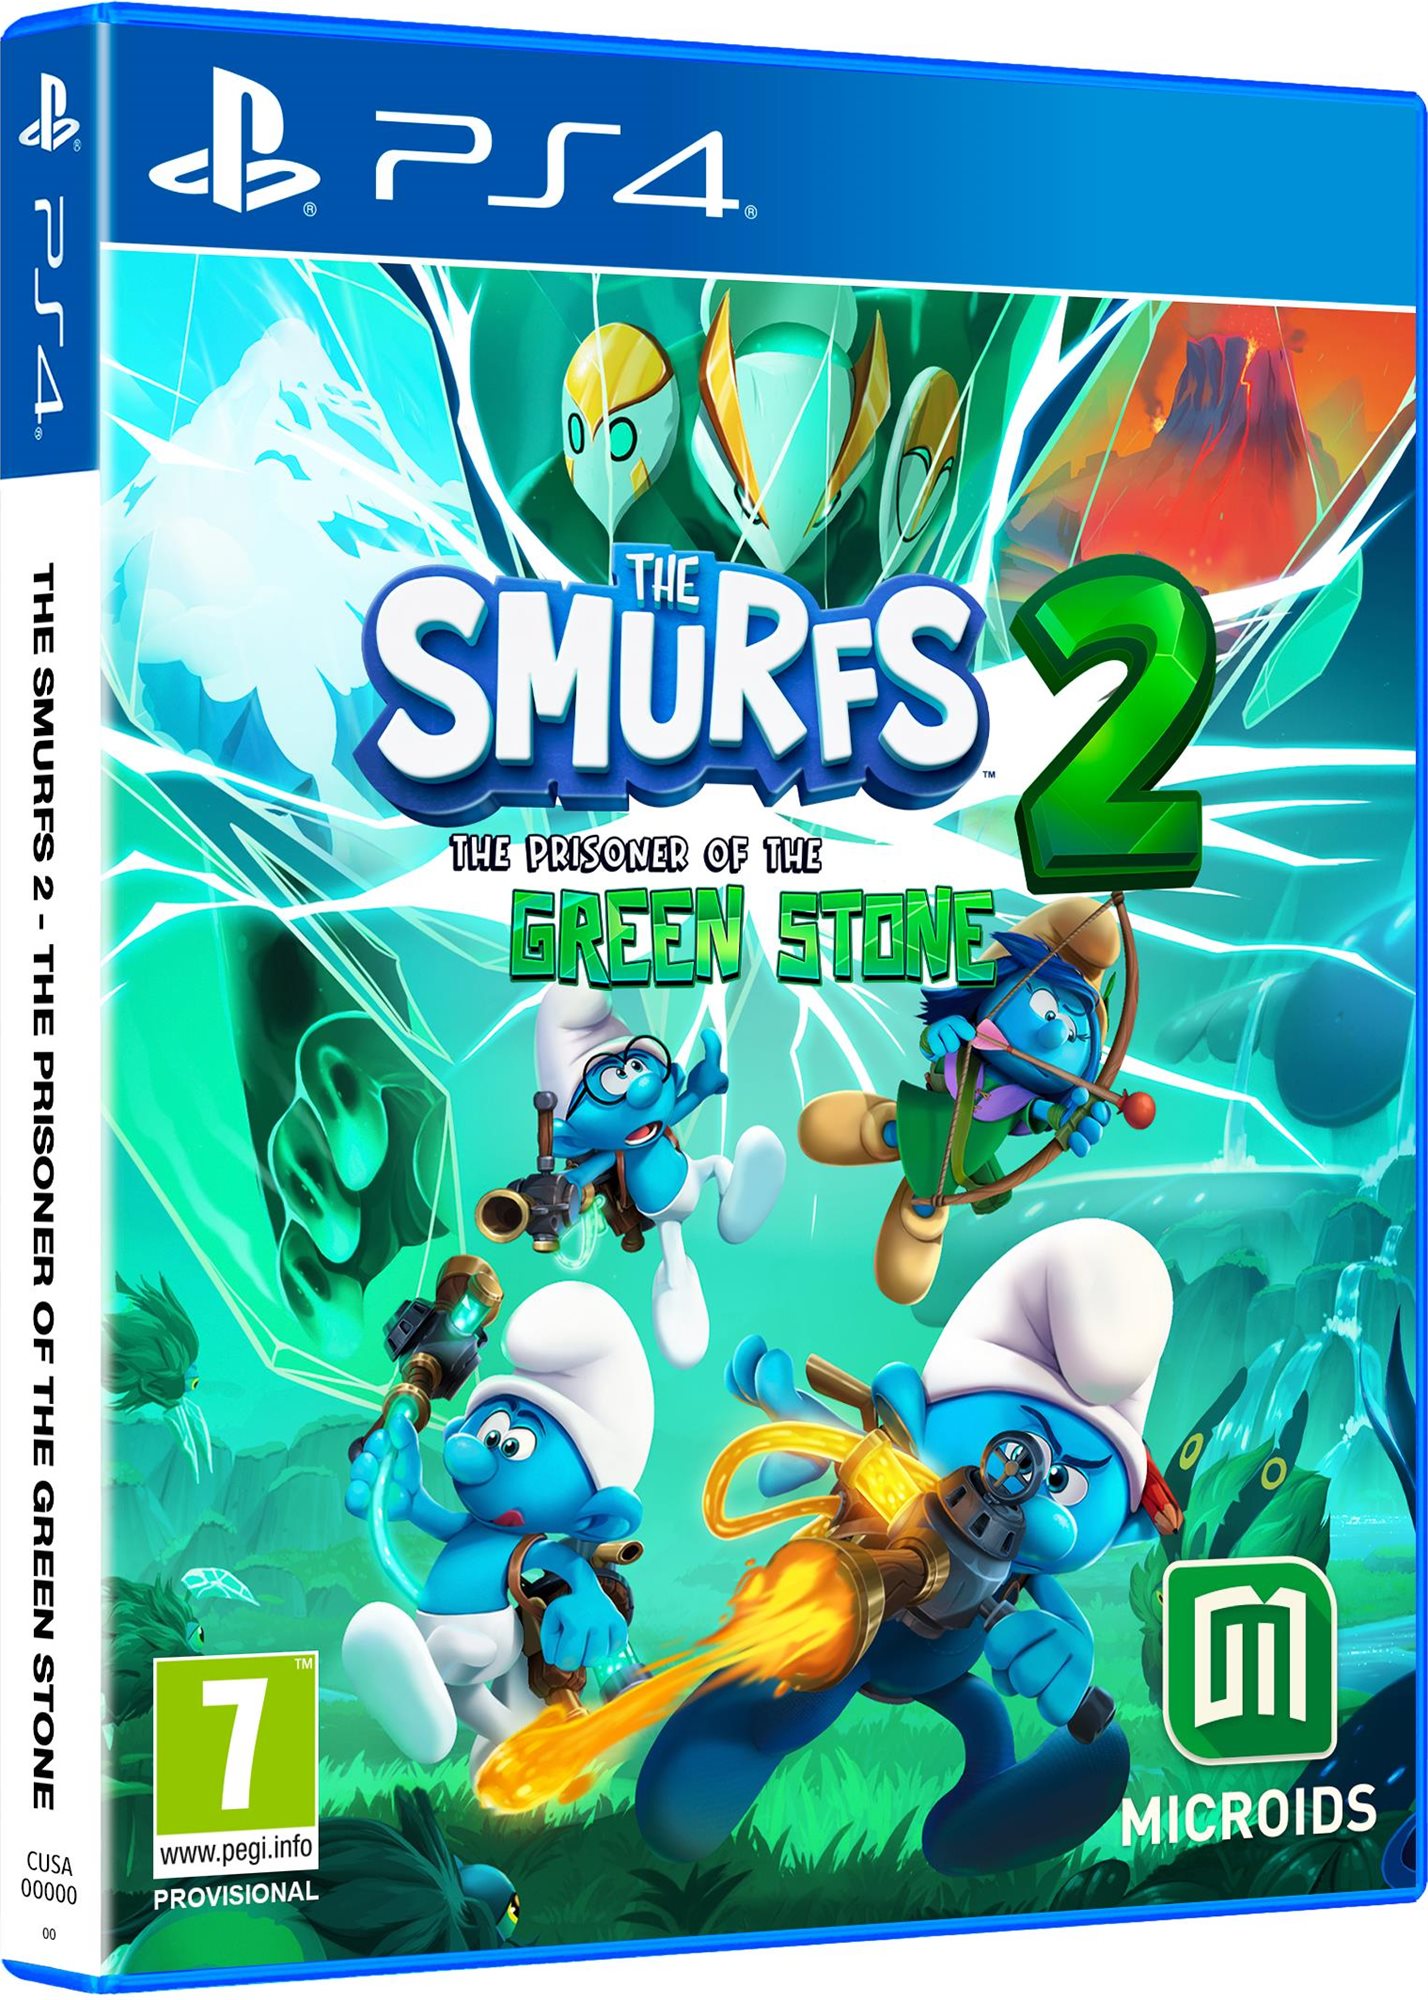 Konzol játék The Smurfs 2: The Prisoner of the Green Stone - PS4